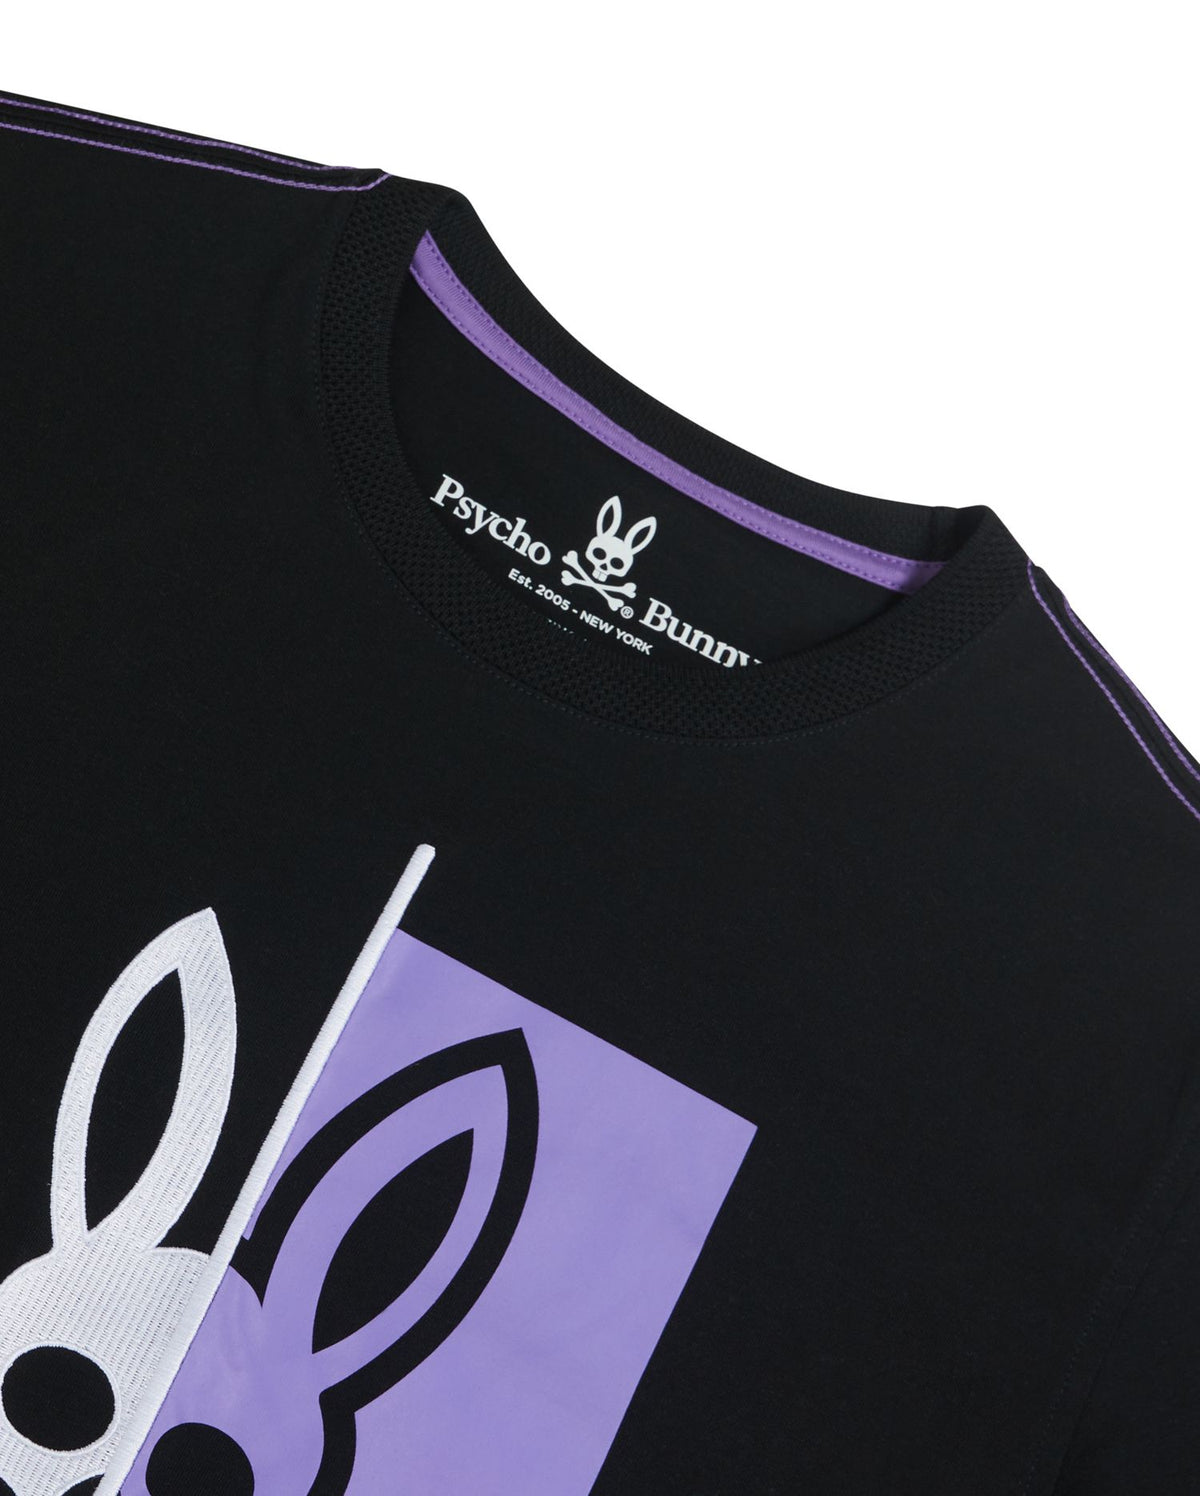 Psycho Bunny-Men's Dovedale Graphic Tee-Black